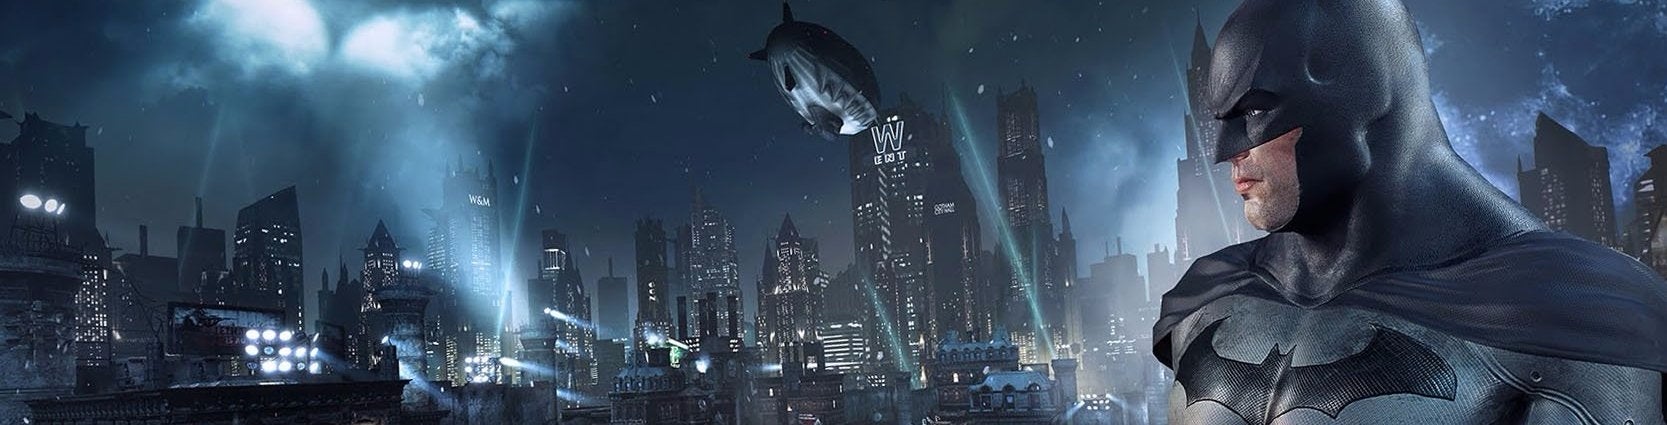 Obrazki dla Digital Foundry kontra Batman: Return to Arkham